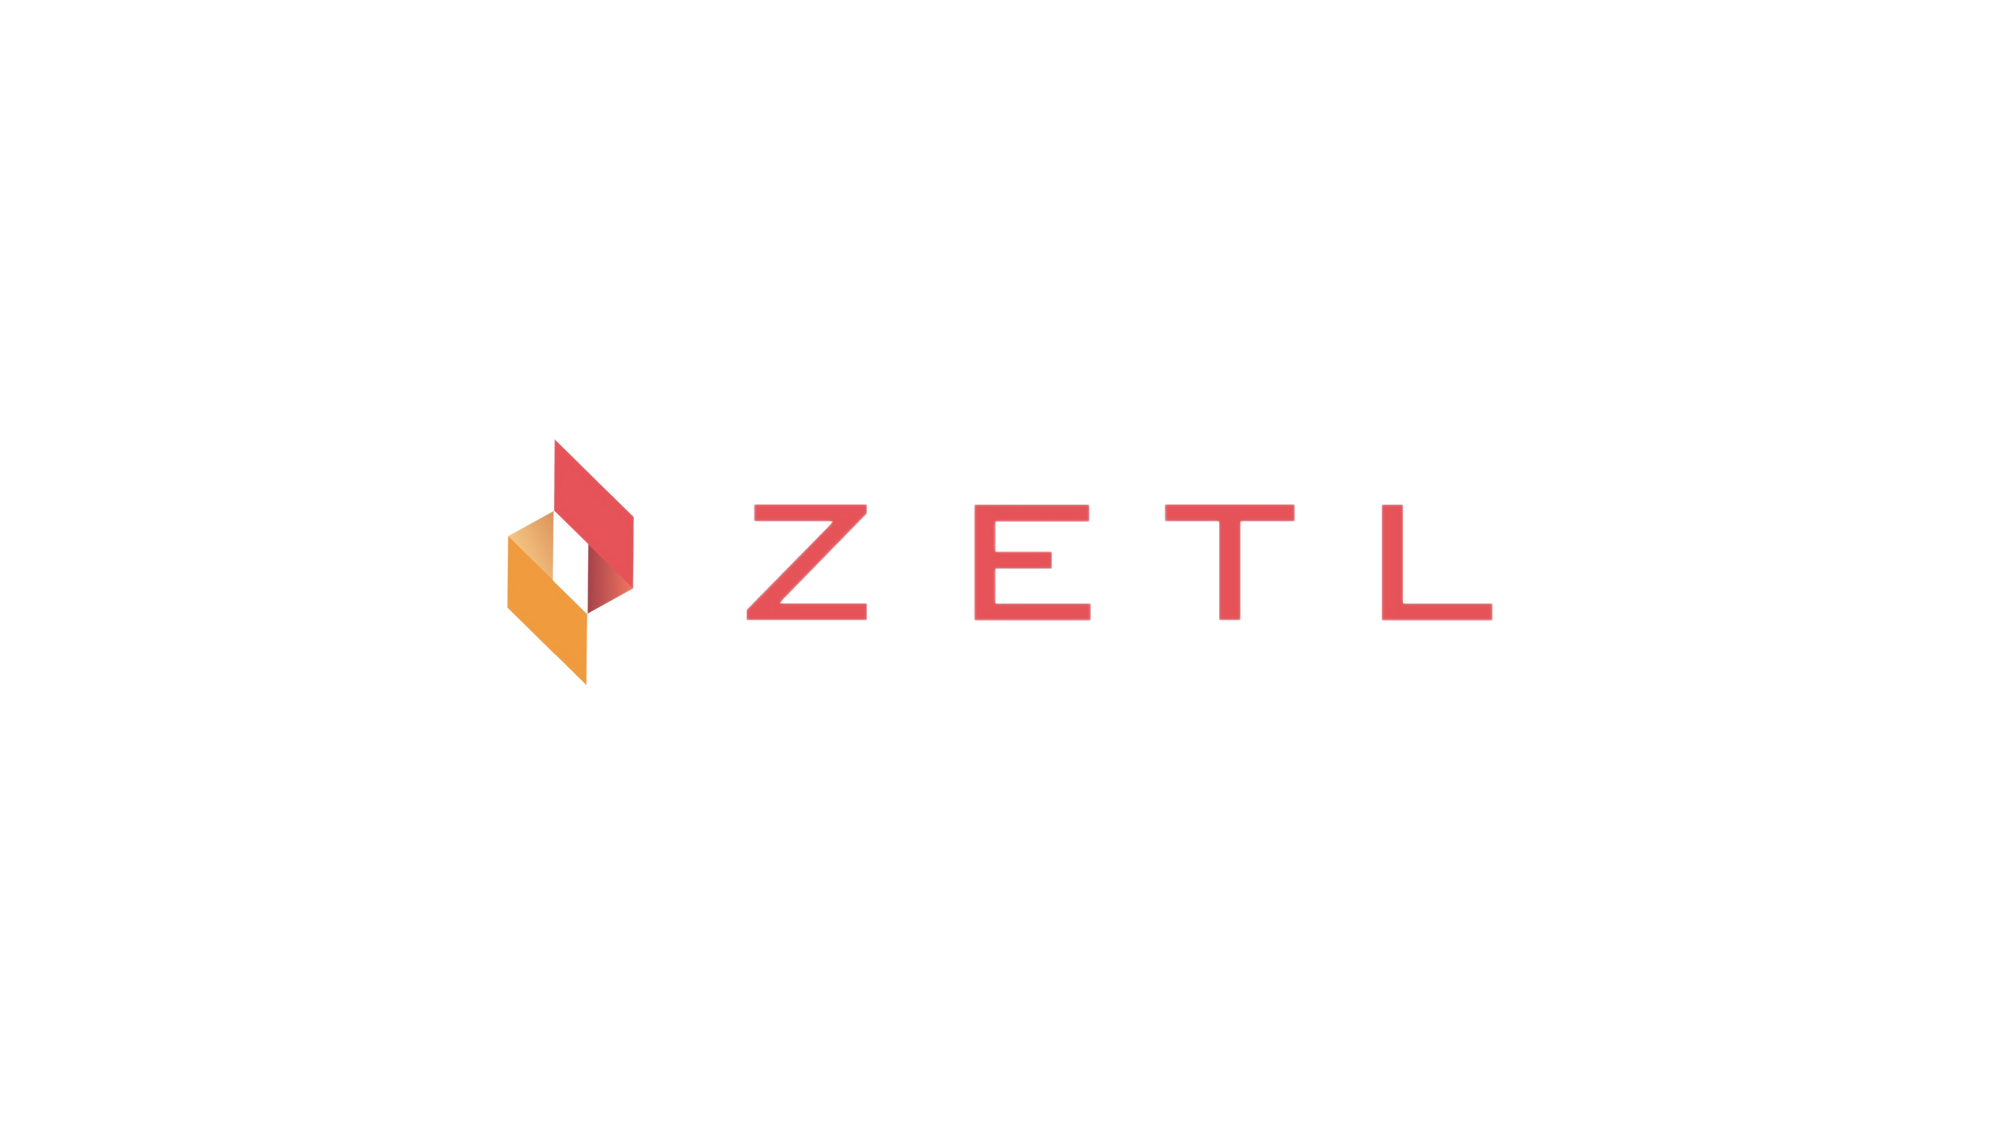 Zetl raises $700K seed round to power SME growth post-COVID